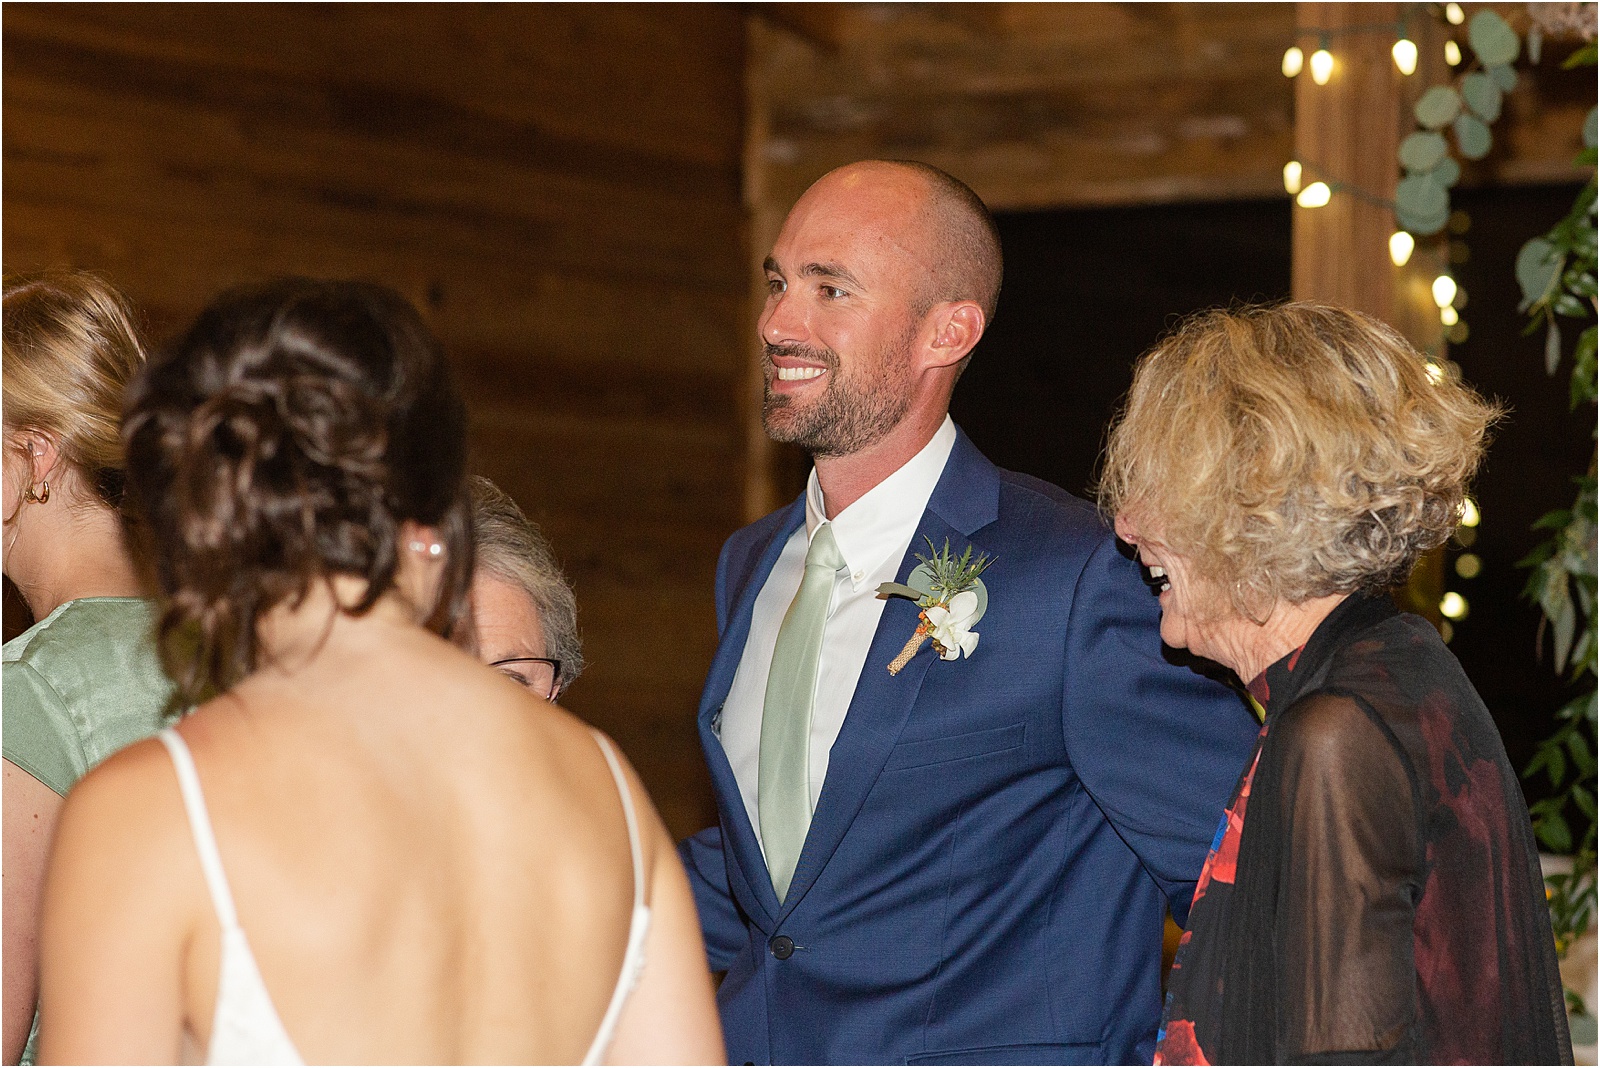 Wedding groom talks with guests at wedding reception